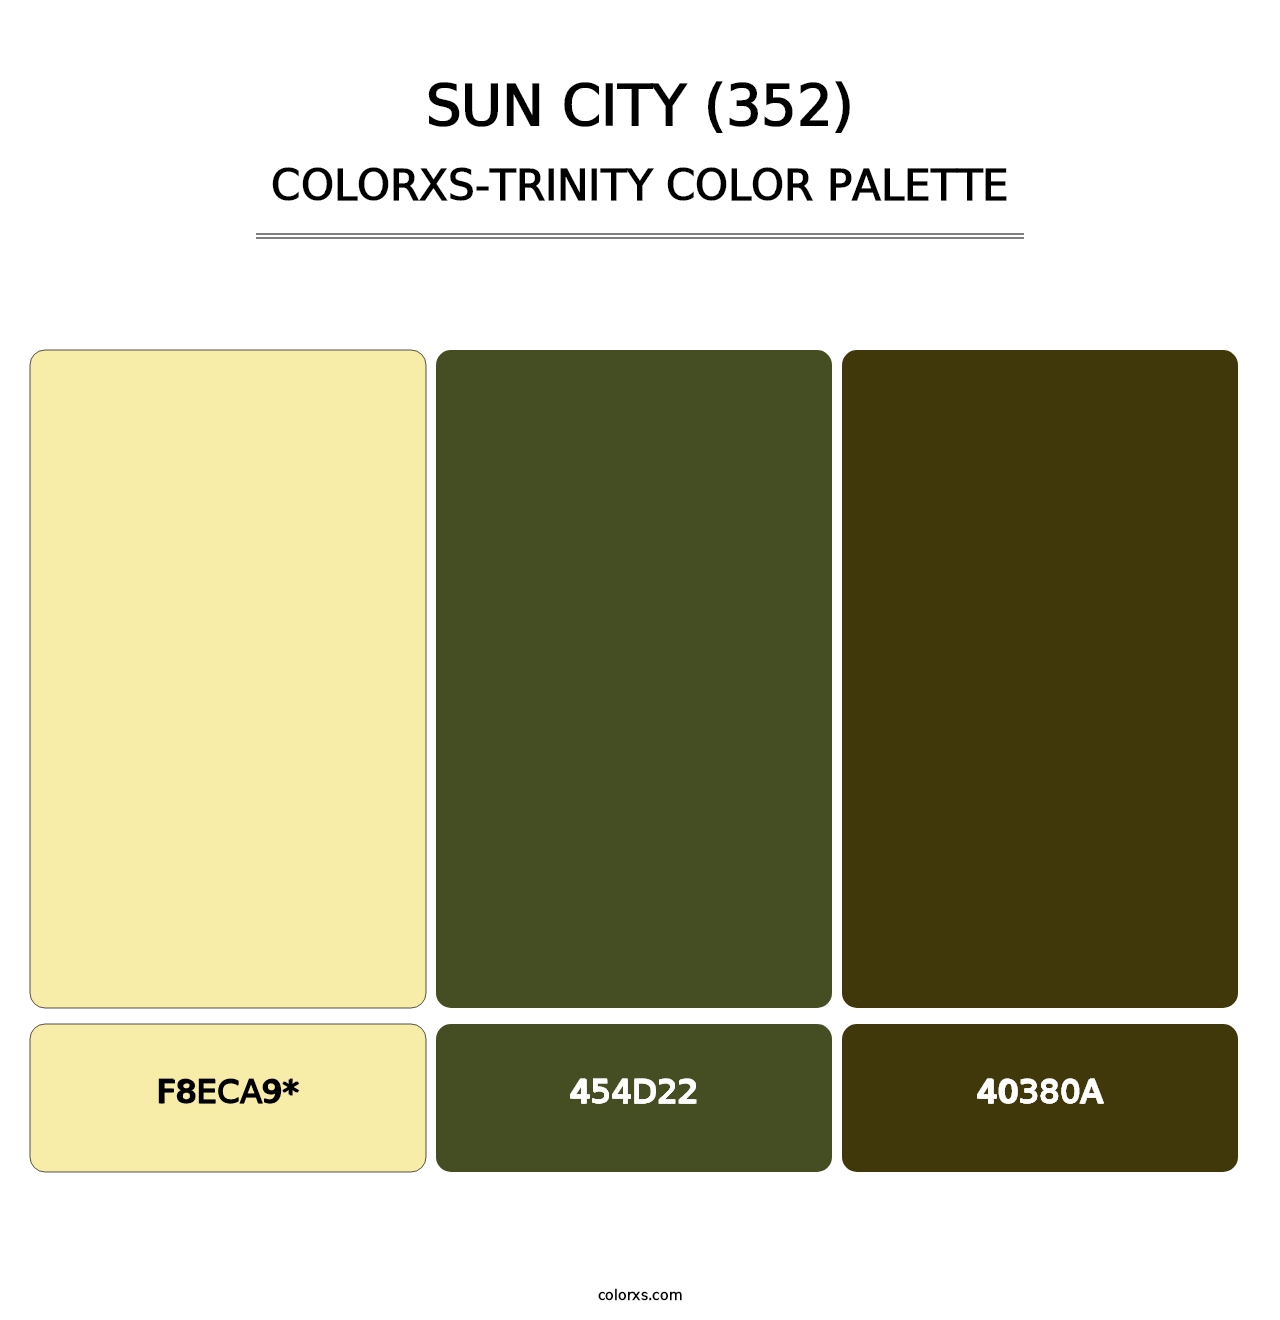 Sun City (352) - Colorxs Trinity Palette